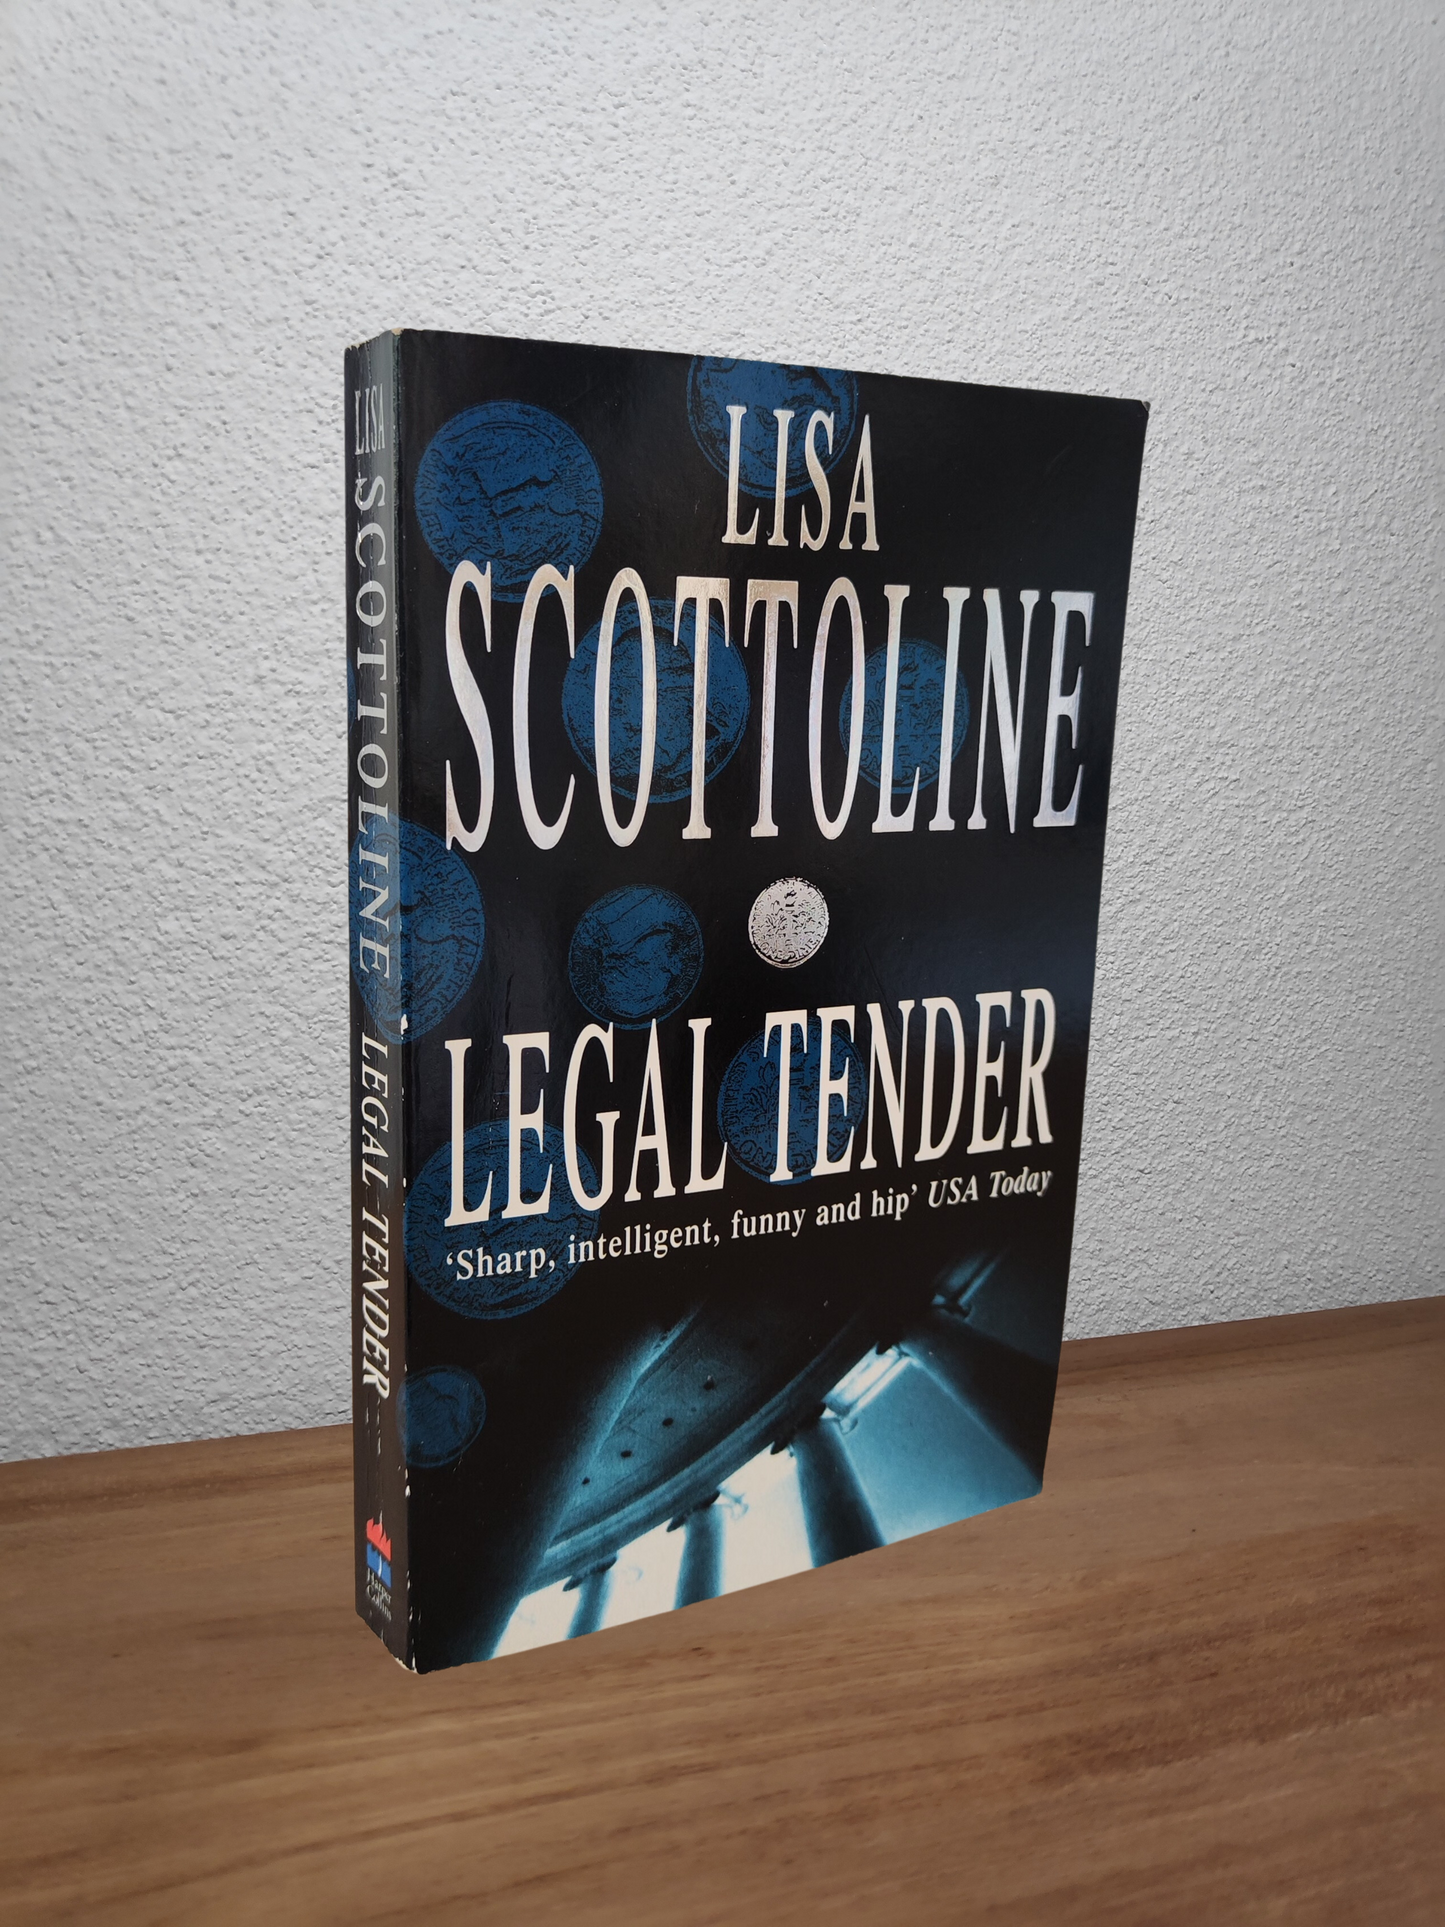 Lisa Scottoline - Legal Tender (Rosato and Associates #2)